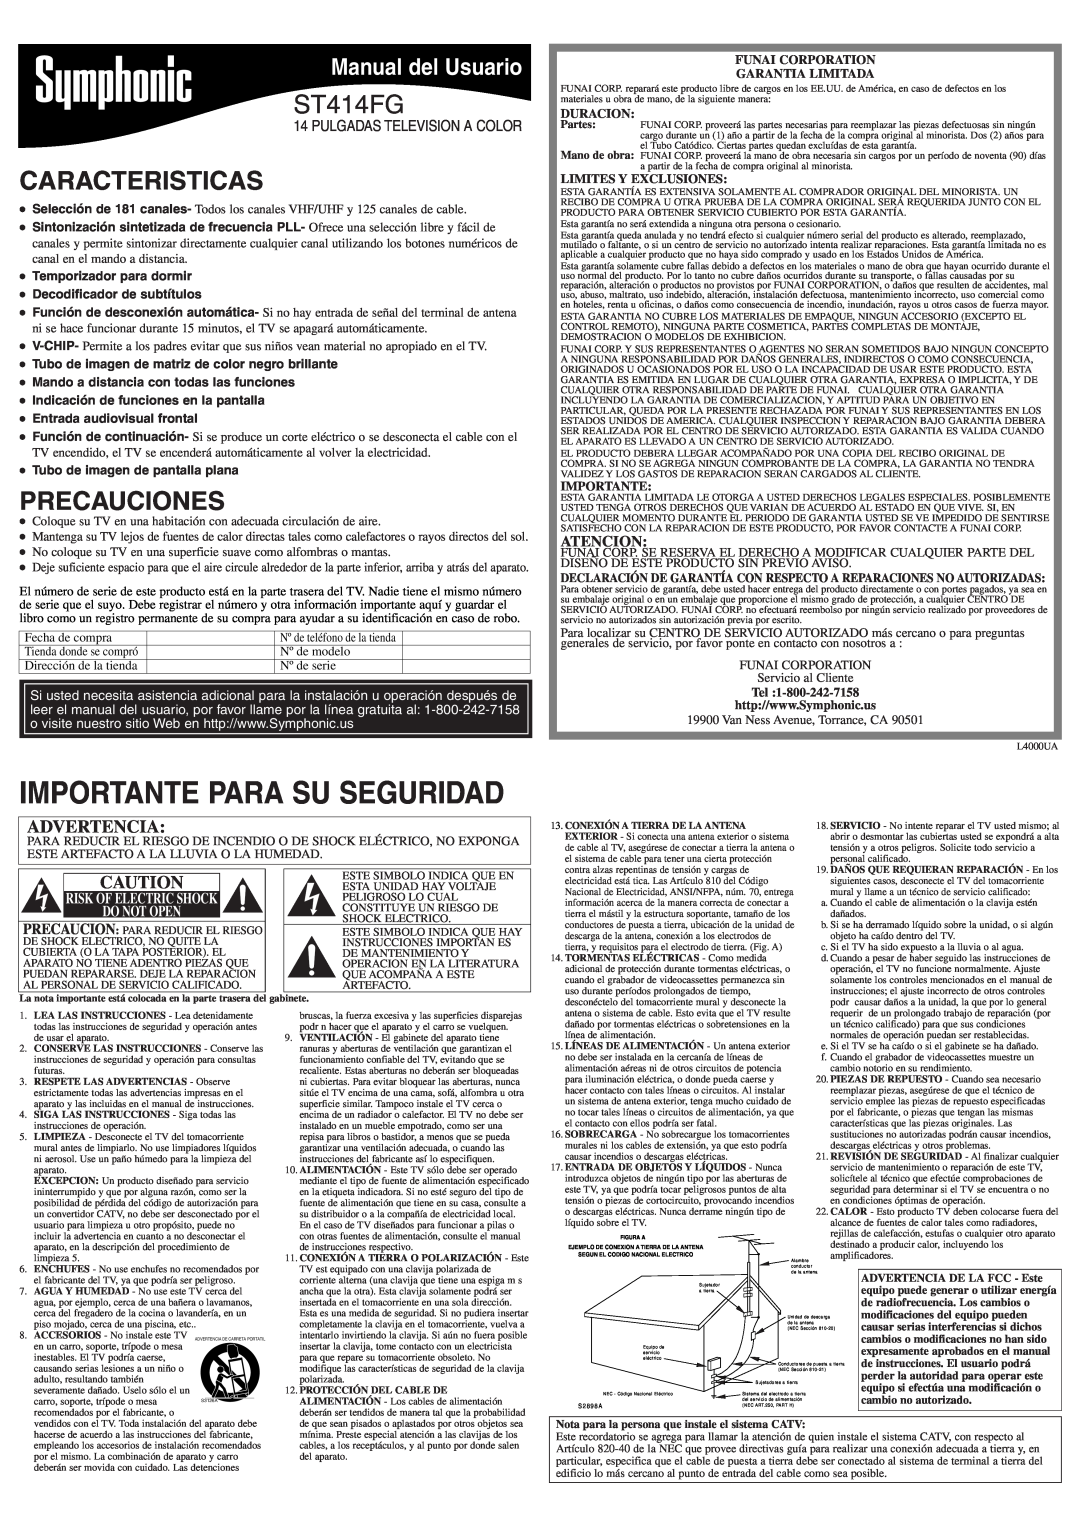 Symphonic ST414FG Caracteristicas, Precauciones, Manual del Usuario, Atencion, Funai Corporation Garantia Limitada 